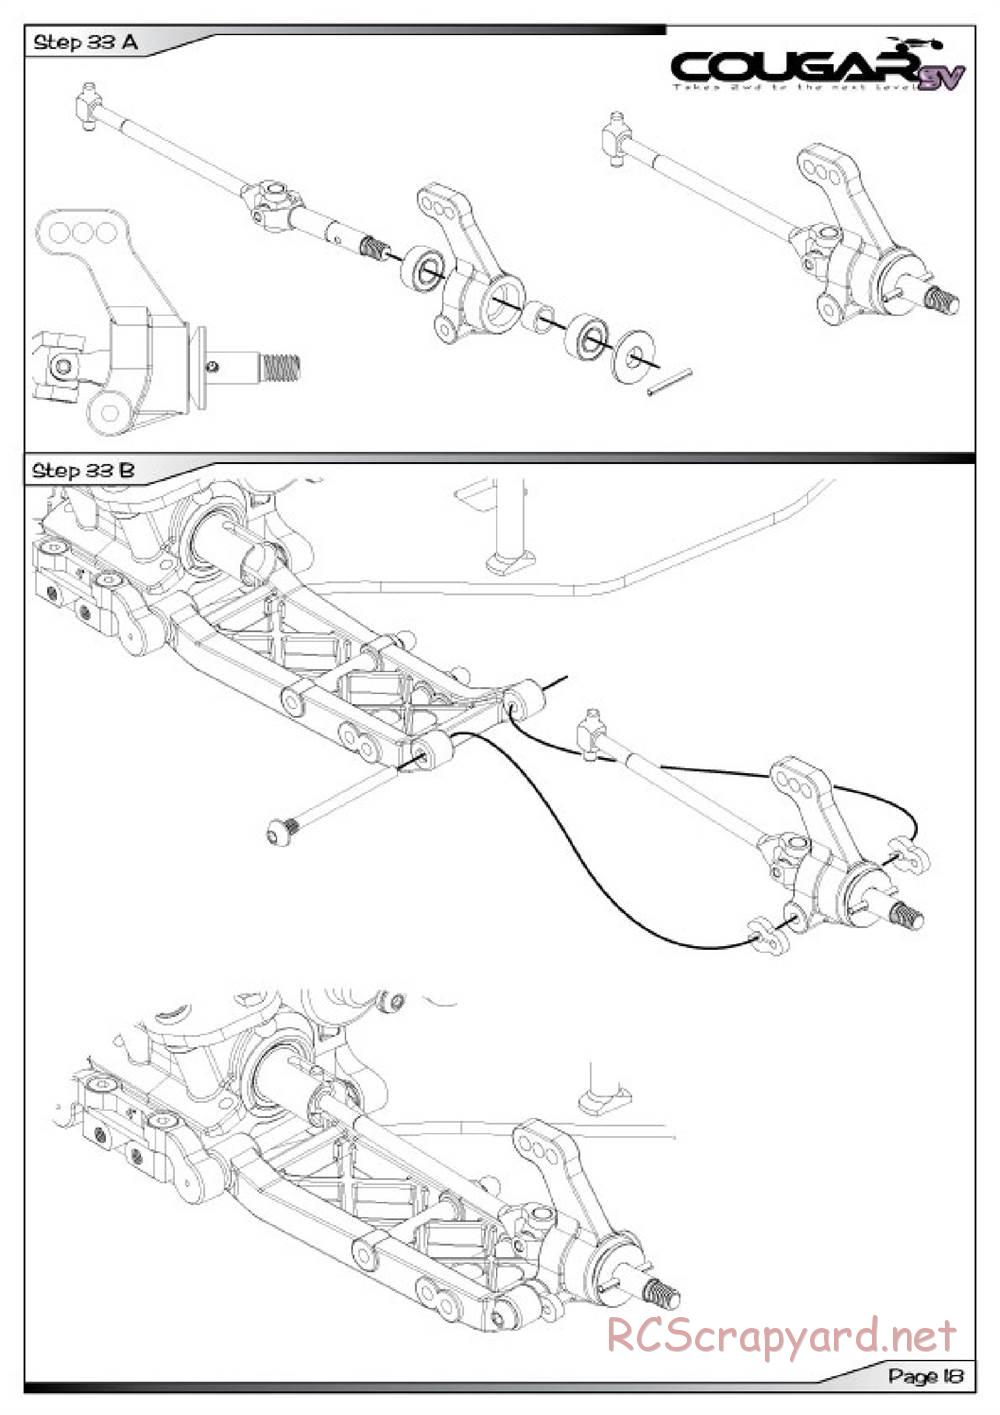 Schumacher - Cougar SV - Manual - Page 19